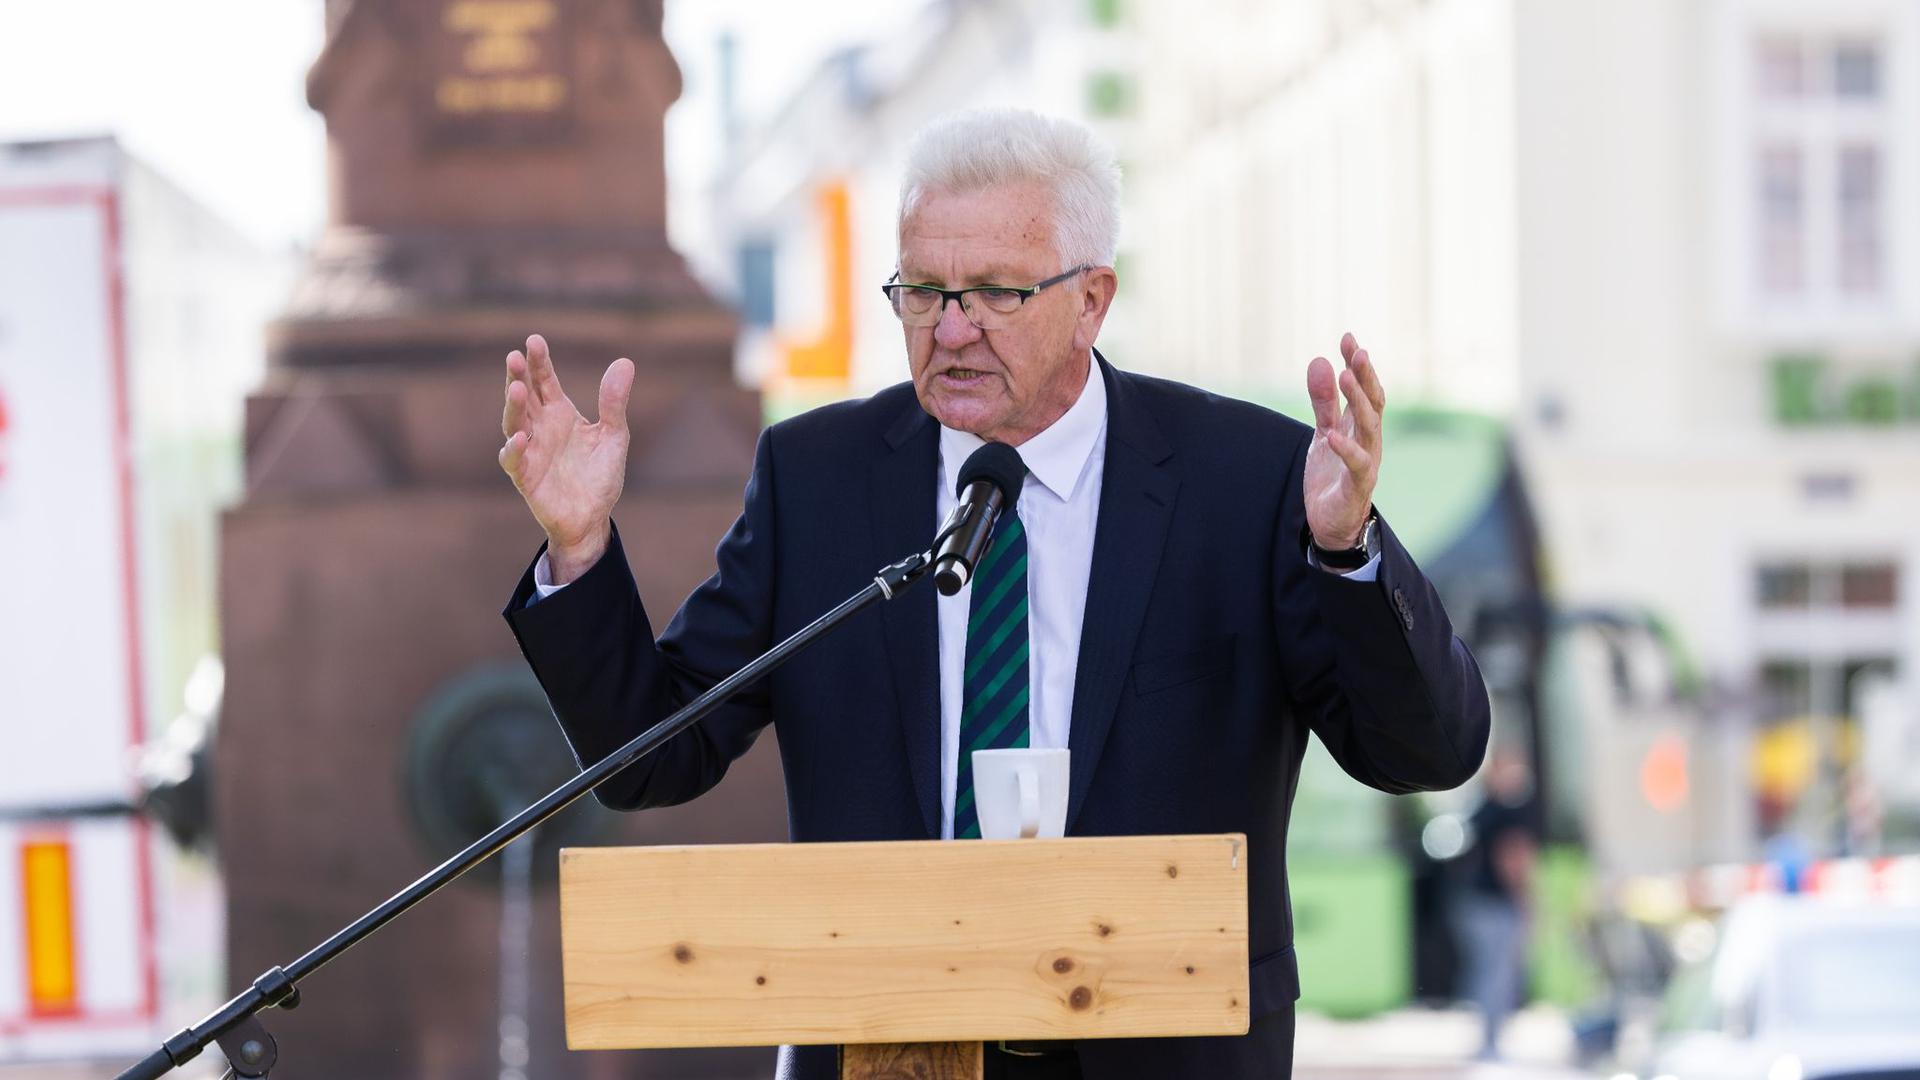 Baden-Württembergs Ministerpräsident Winfried Kretschmann spricht bei einer Wahlkampfveranstaltung.